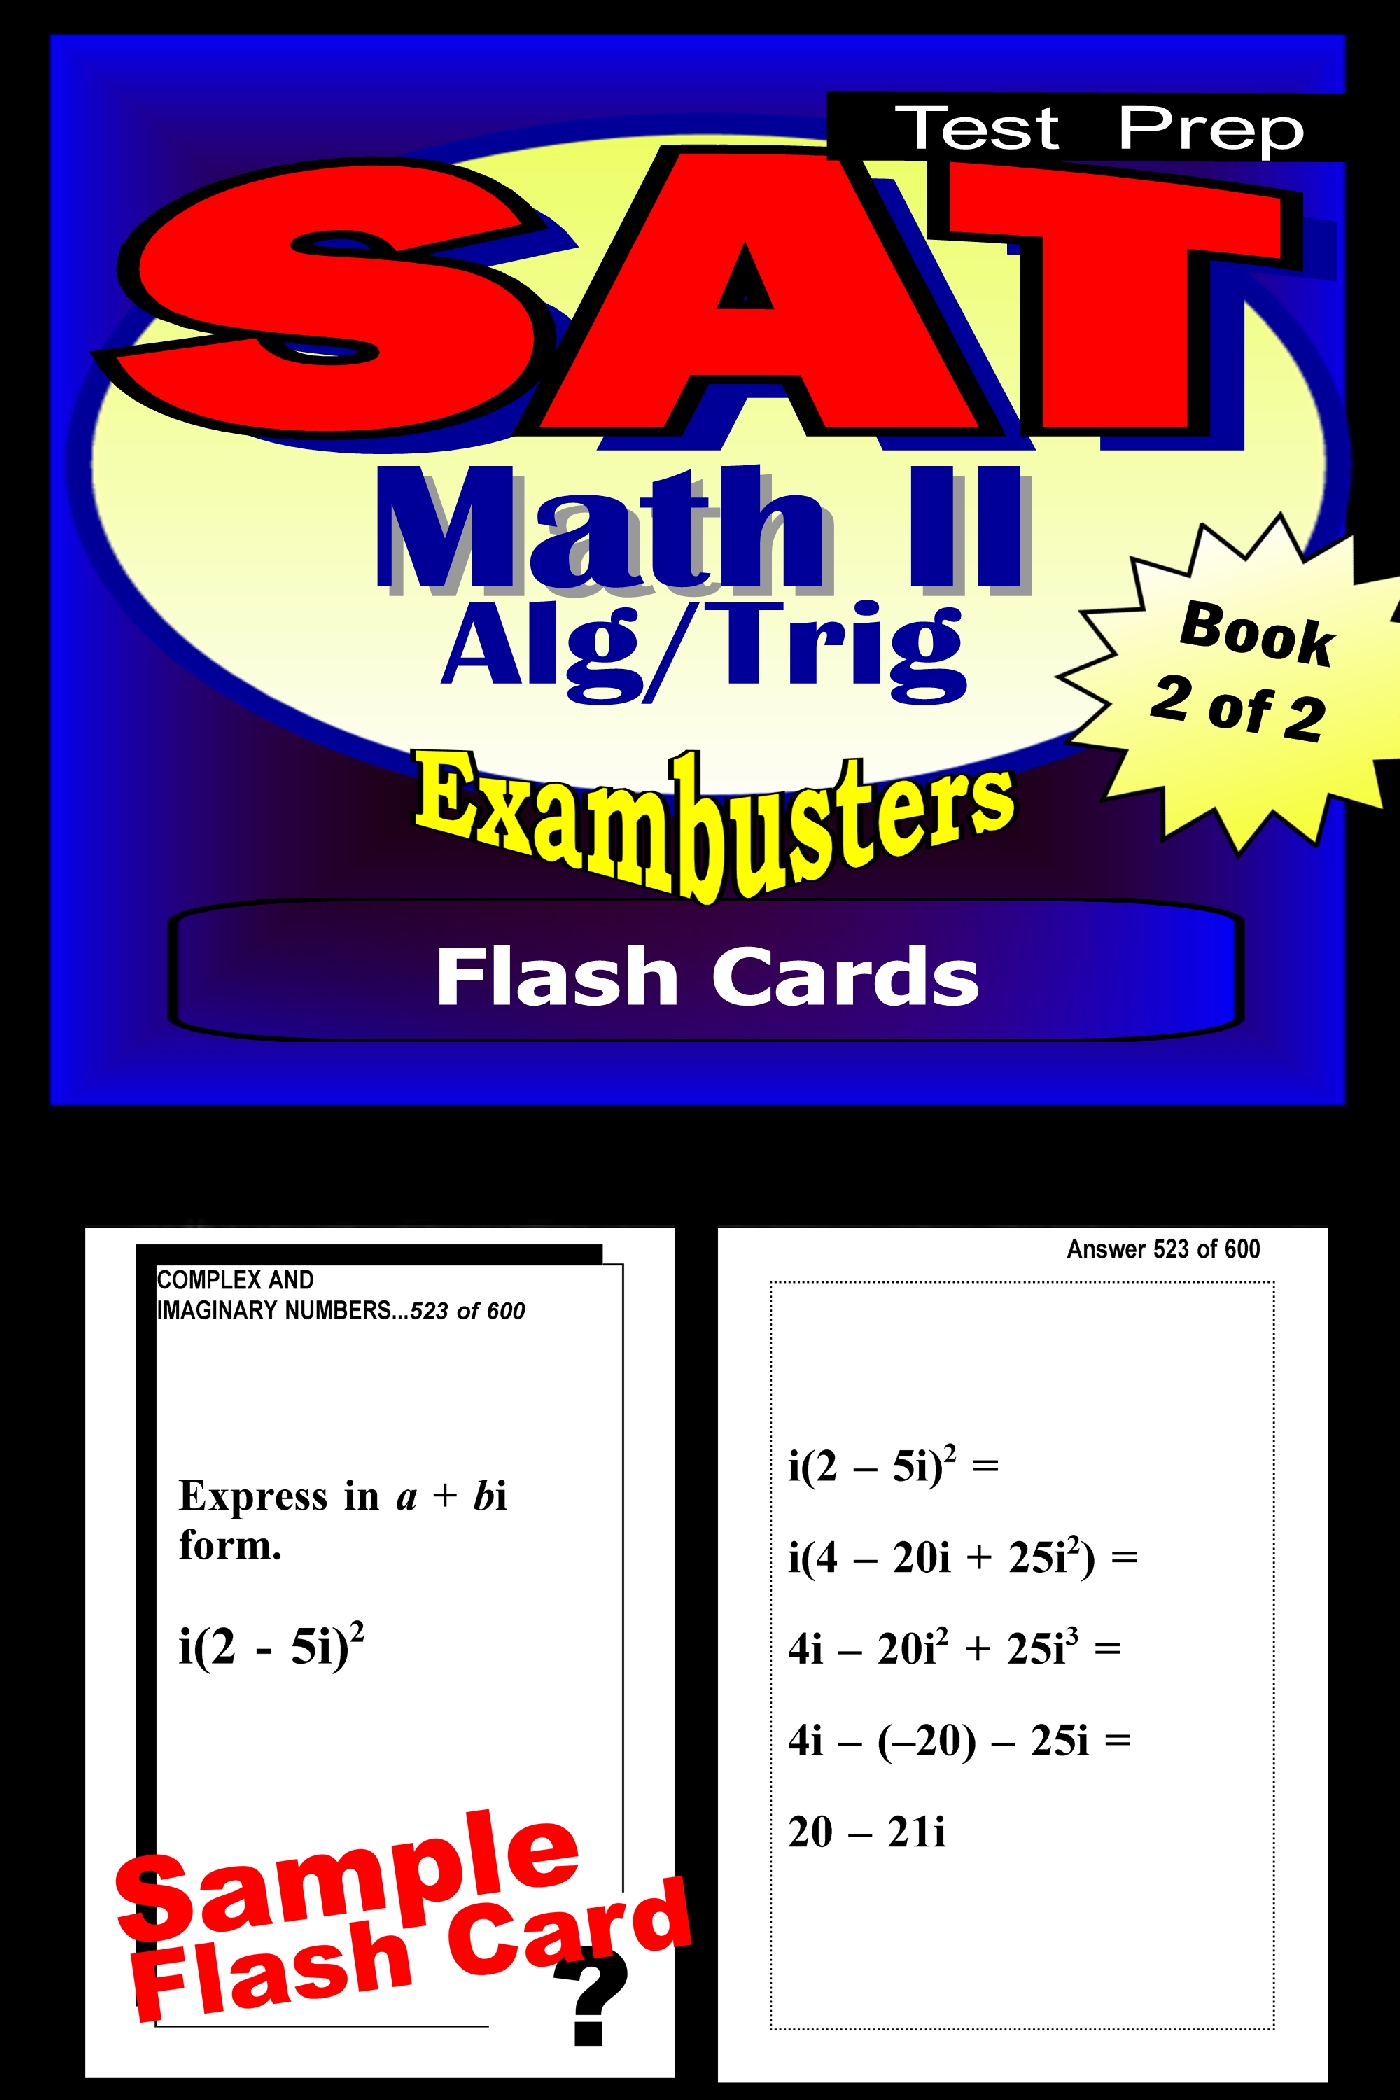 Sat Math Test. A Level Math Test. Math 26 уровень. Sat Math book. Math level 31